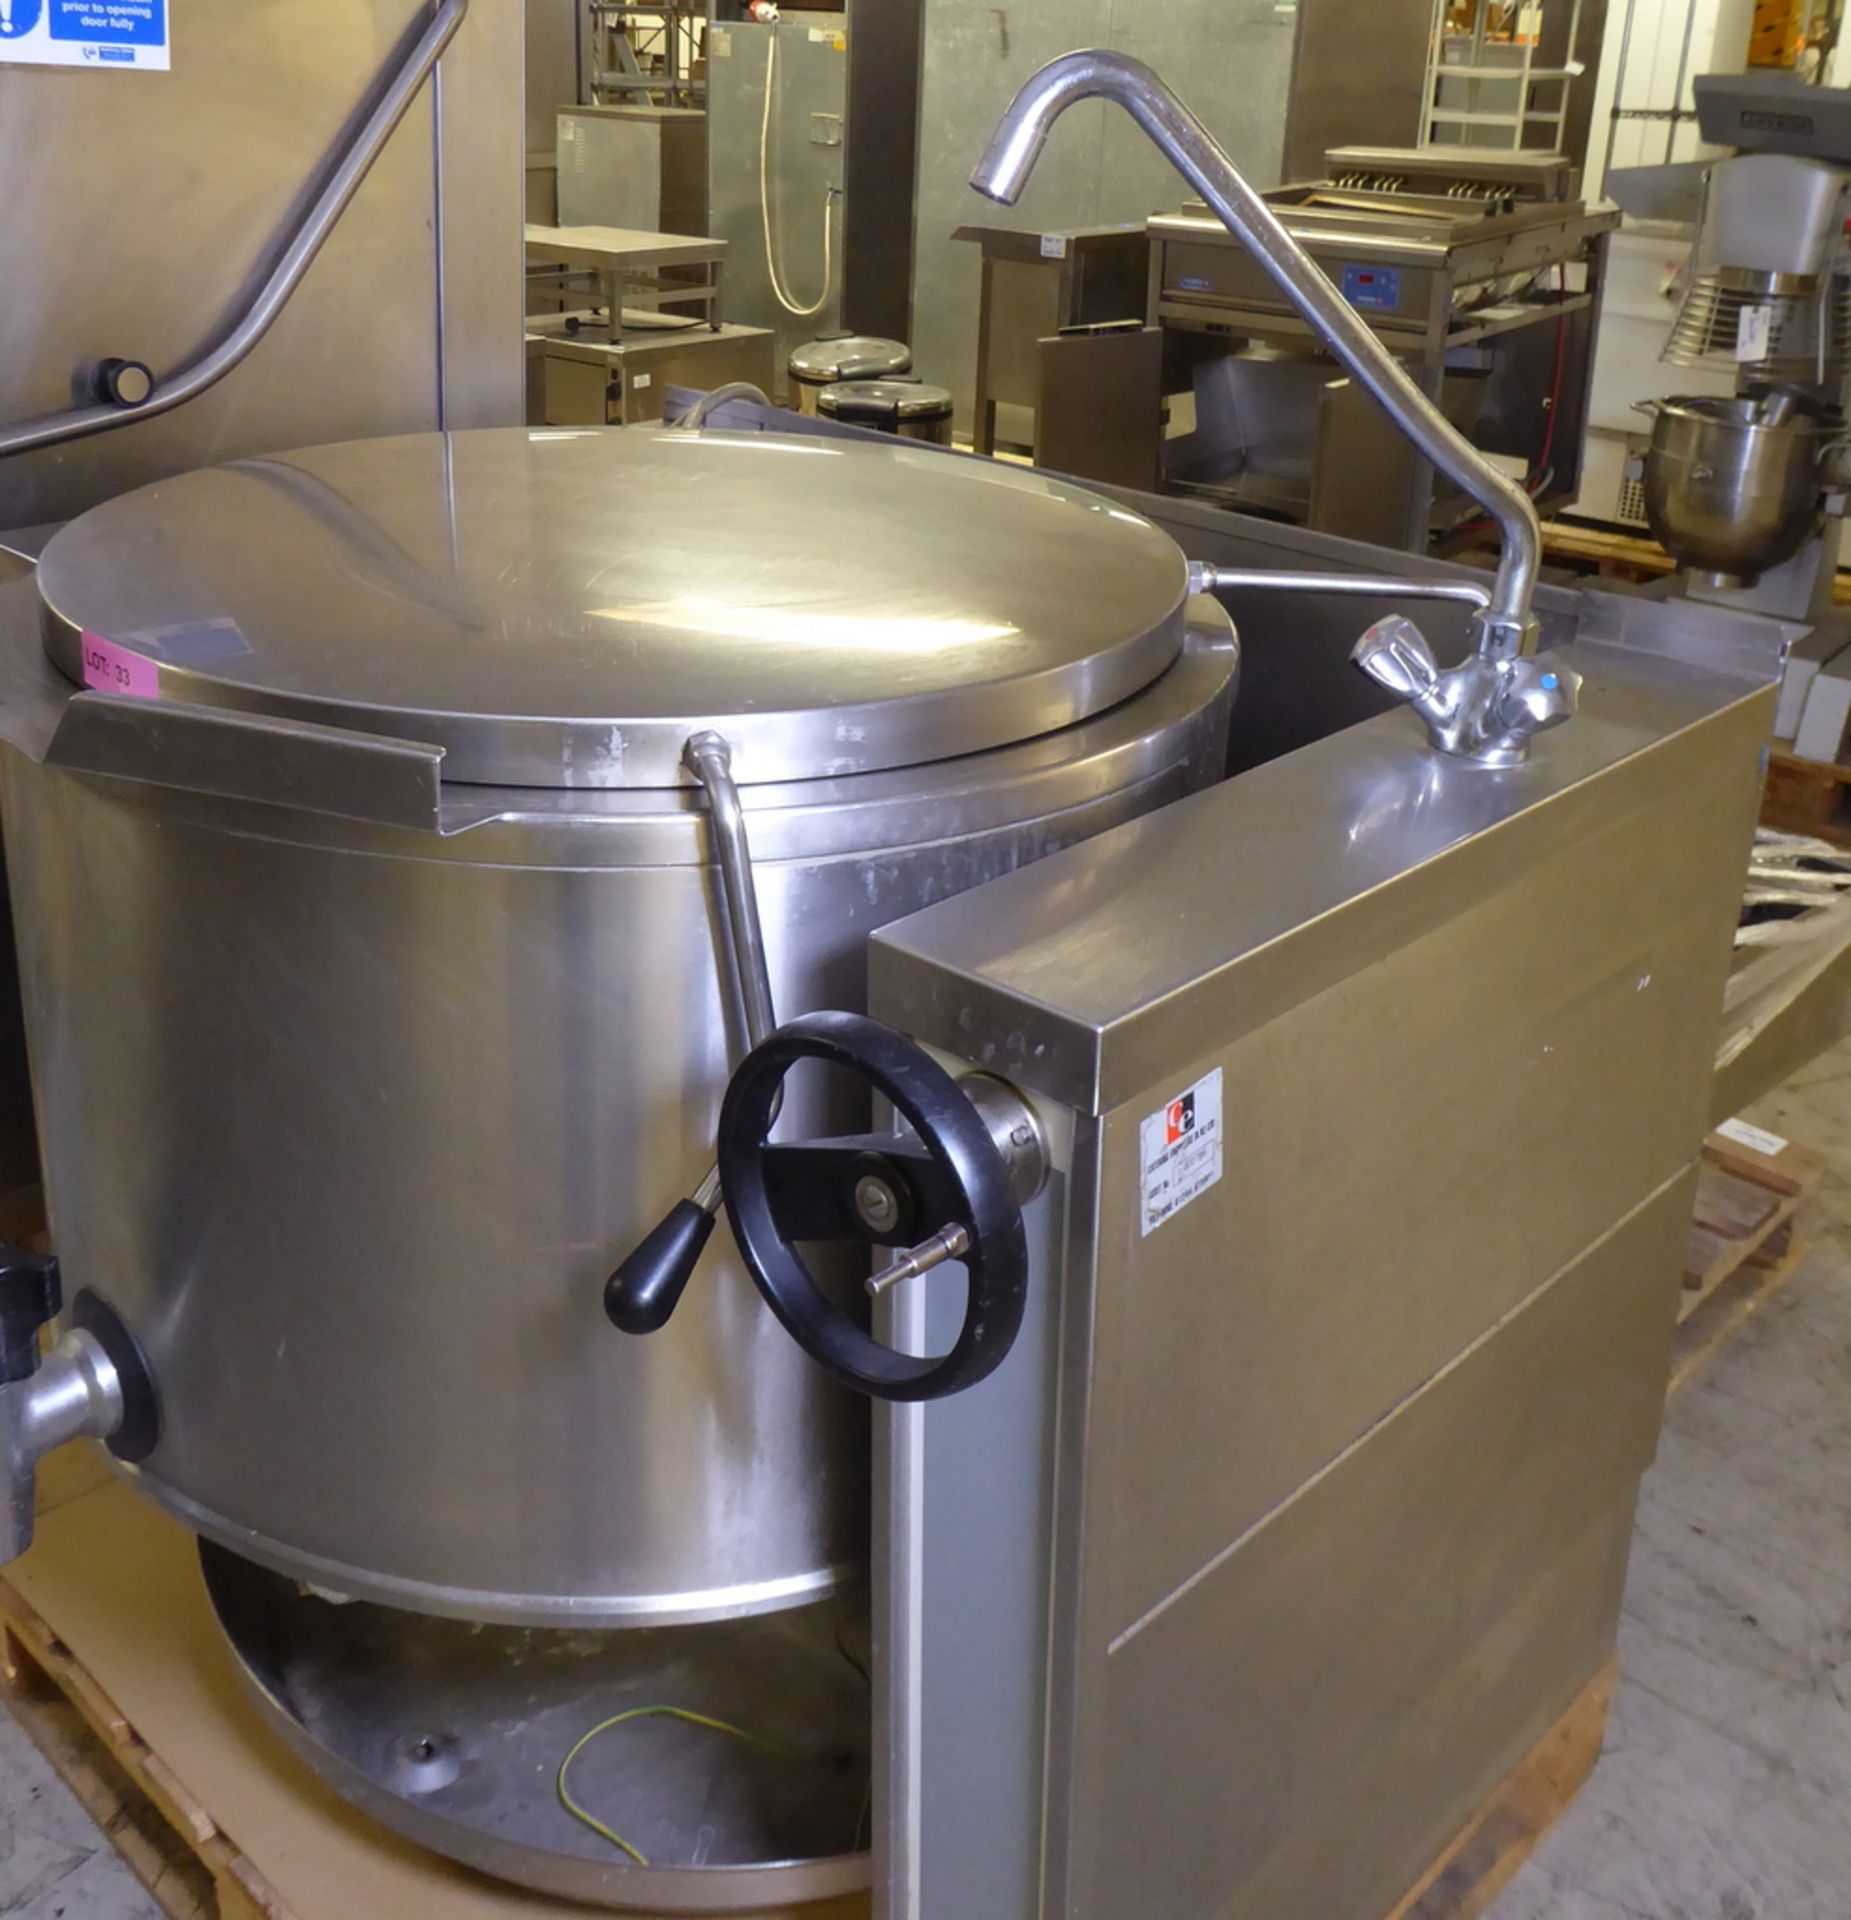 Elro JK3-200 Tilting kettle / Bratt Pan 221LTR, 32A 3 Phase, 130 x 110 x 90cm (WxDxH) - Image 4 of 7